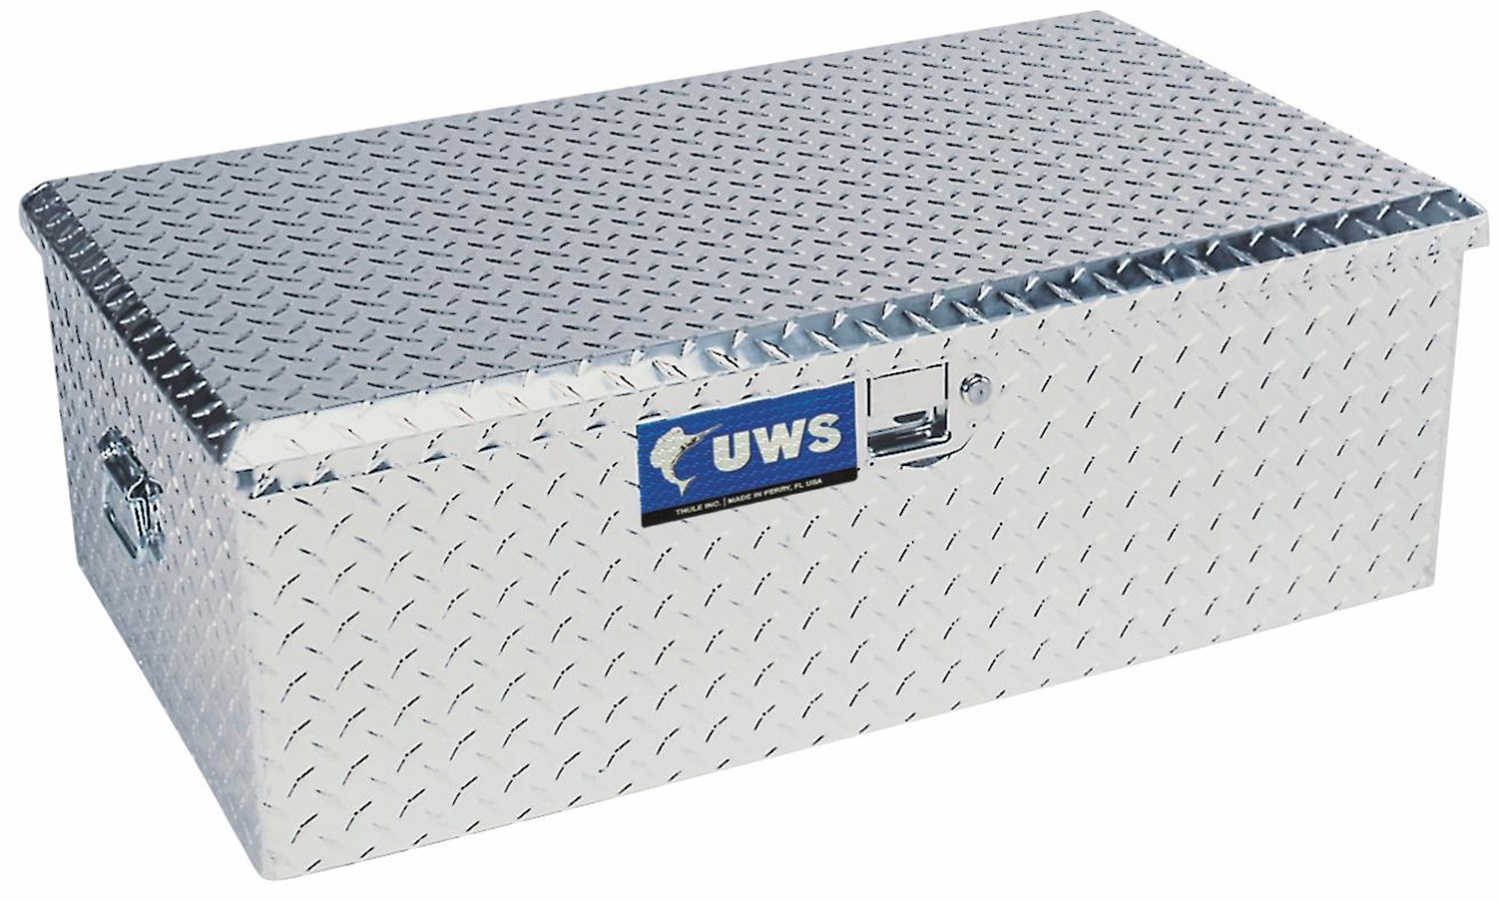 UWS UWS FOOT-LOCKER Footlocker; Storage Box